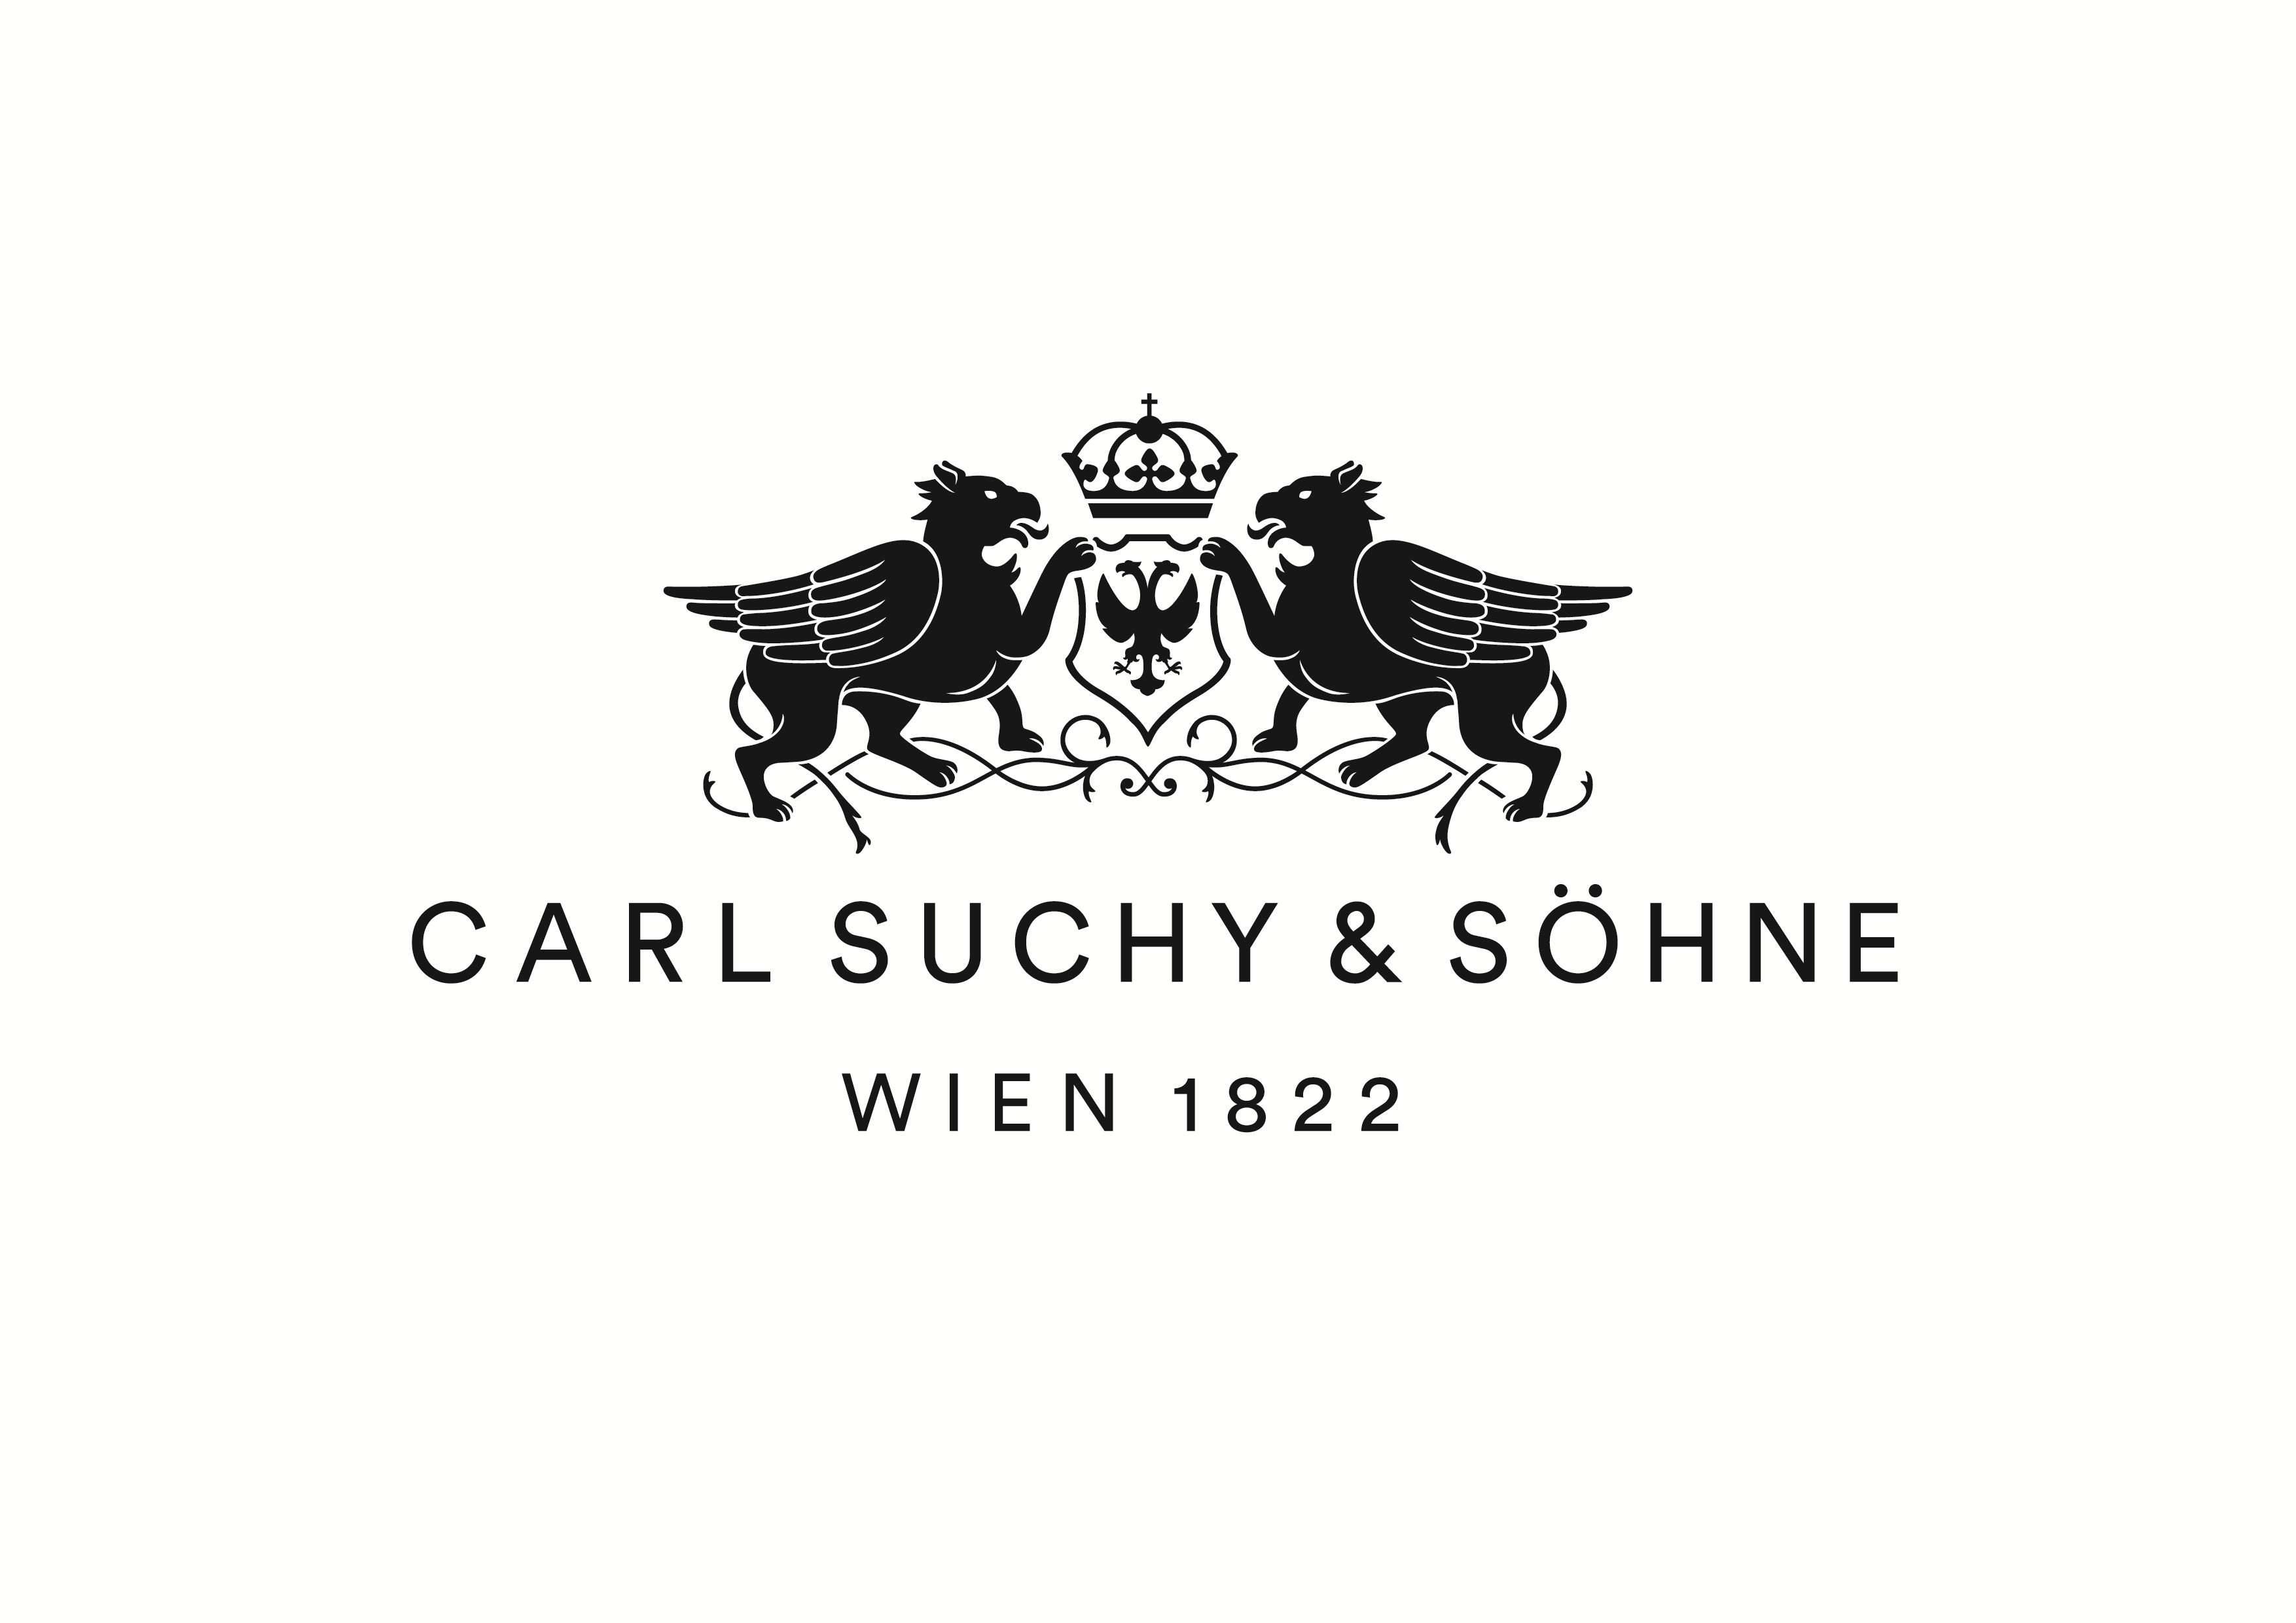 Carl Suchy & Söhne